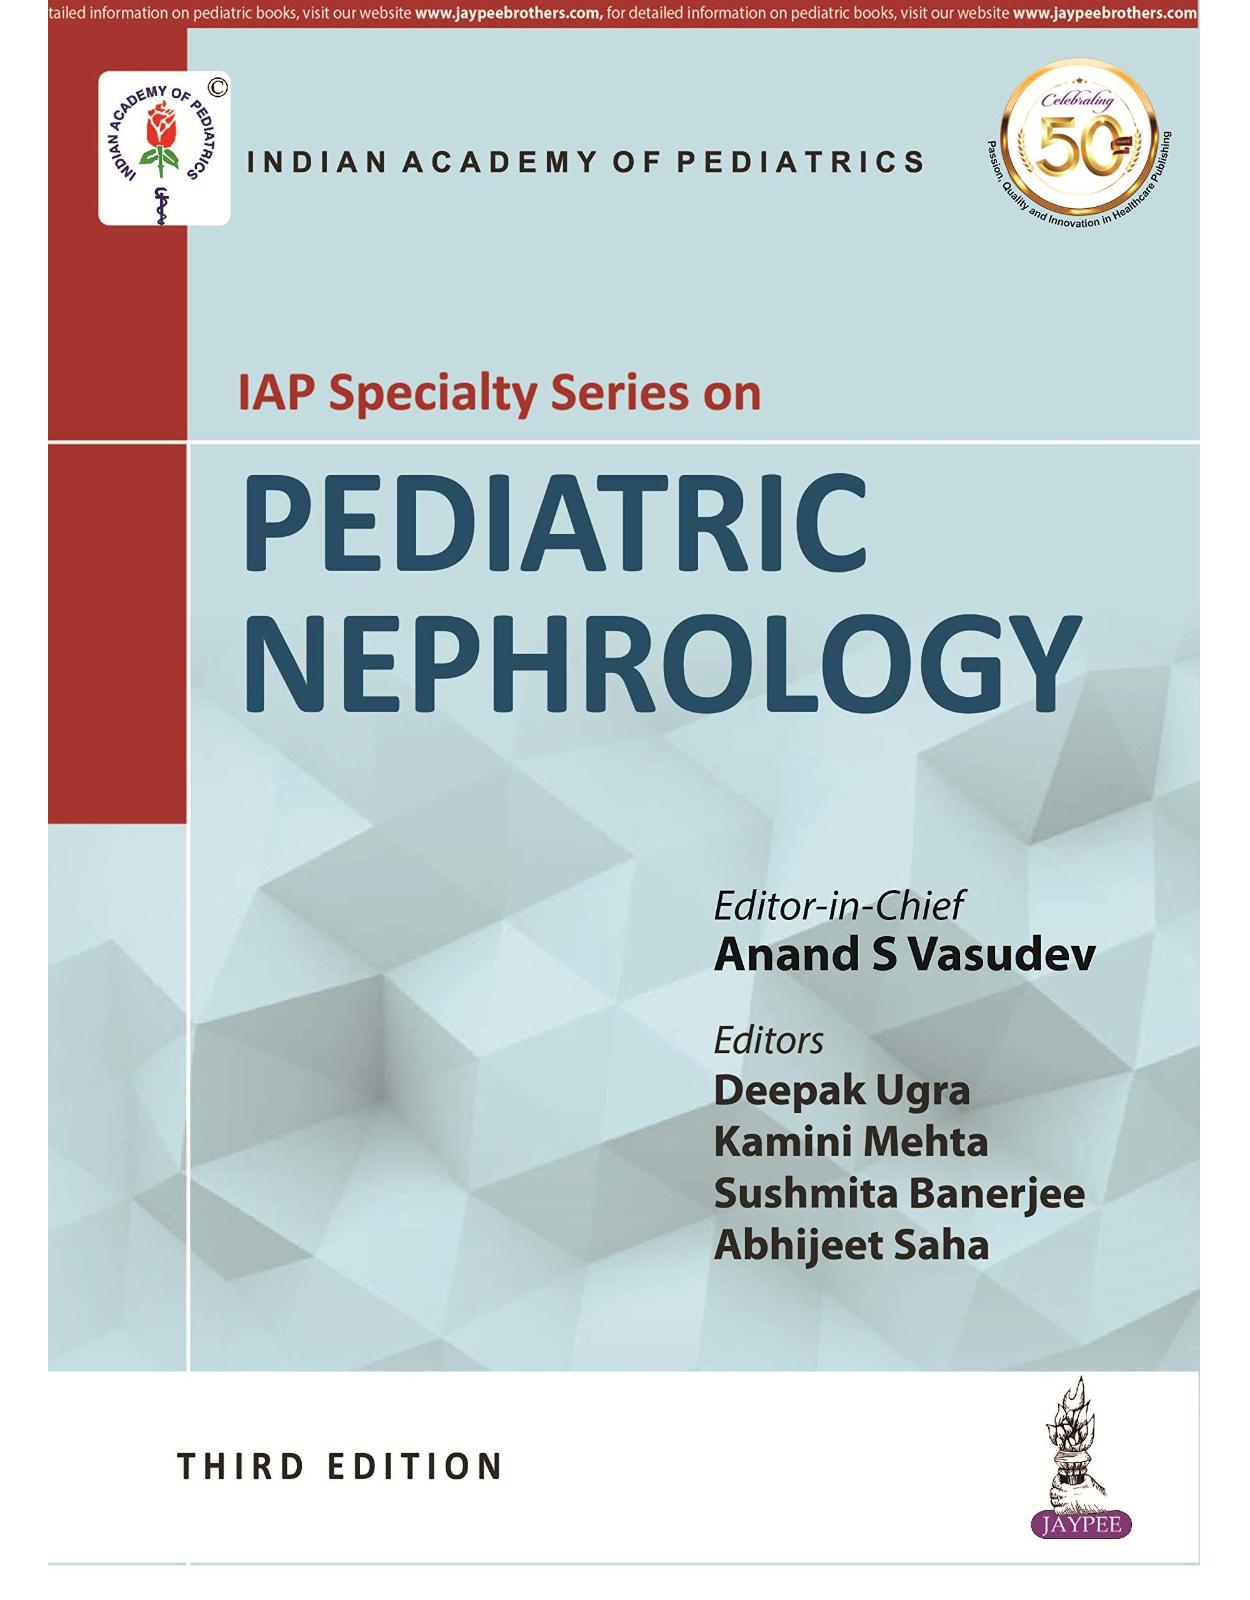 Specialty Series on Pediatric Nephrology